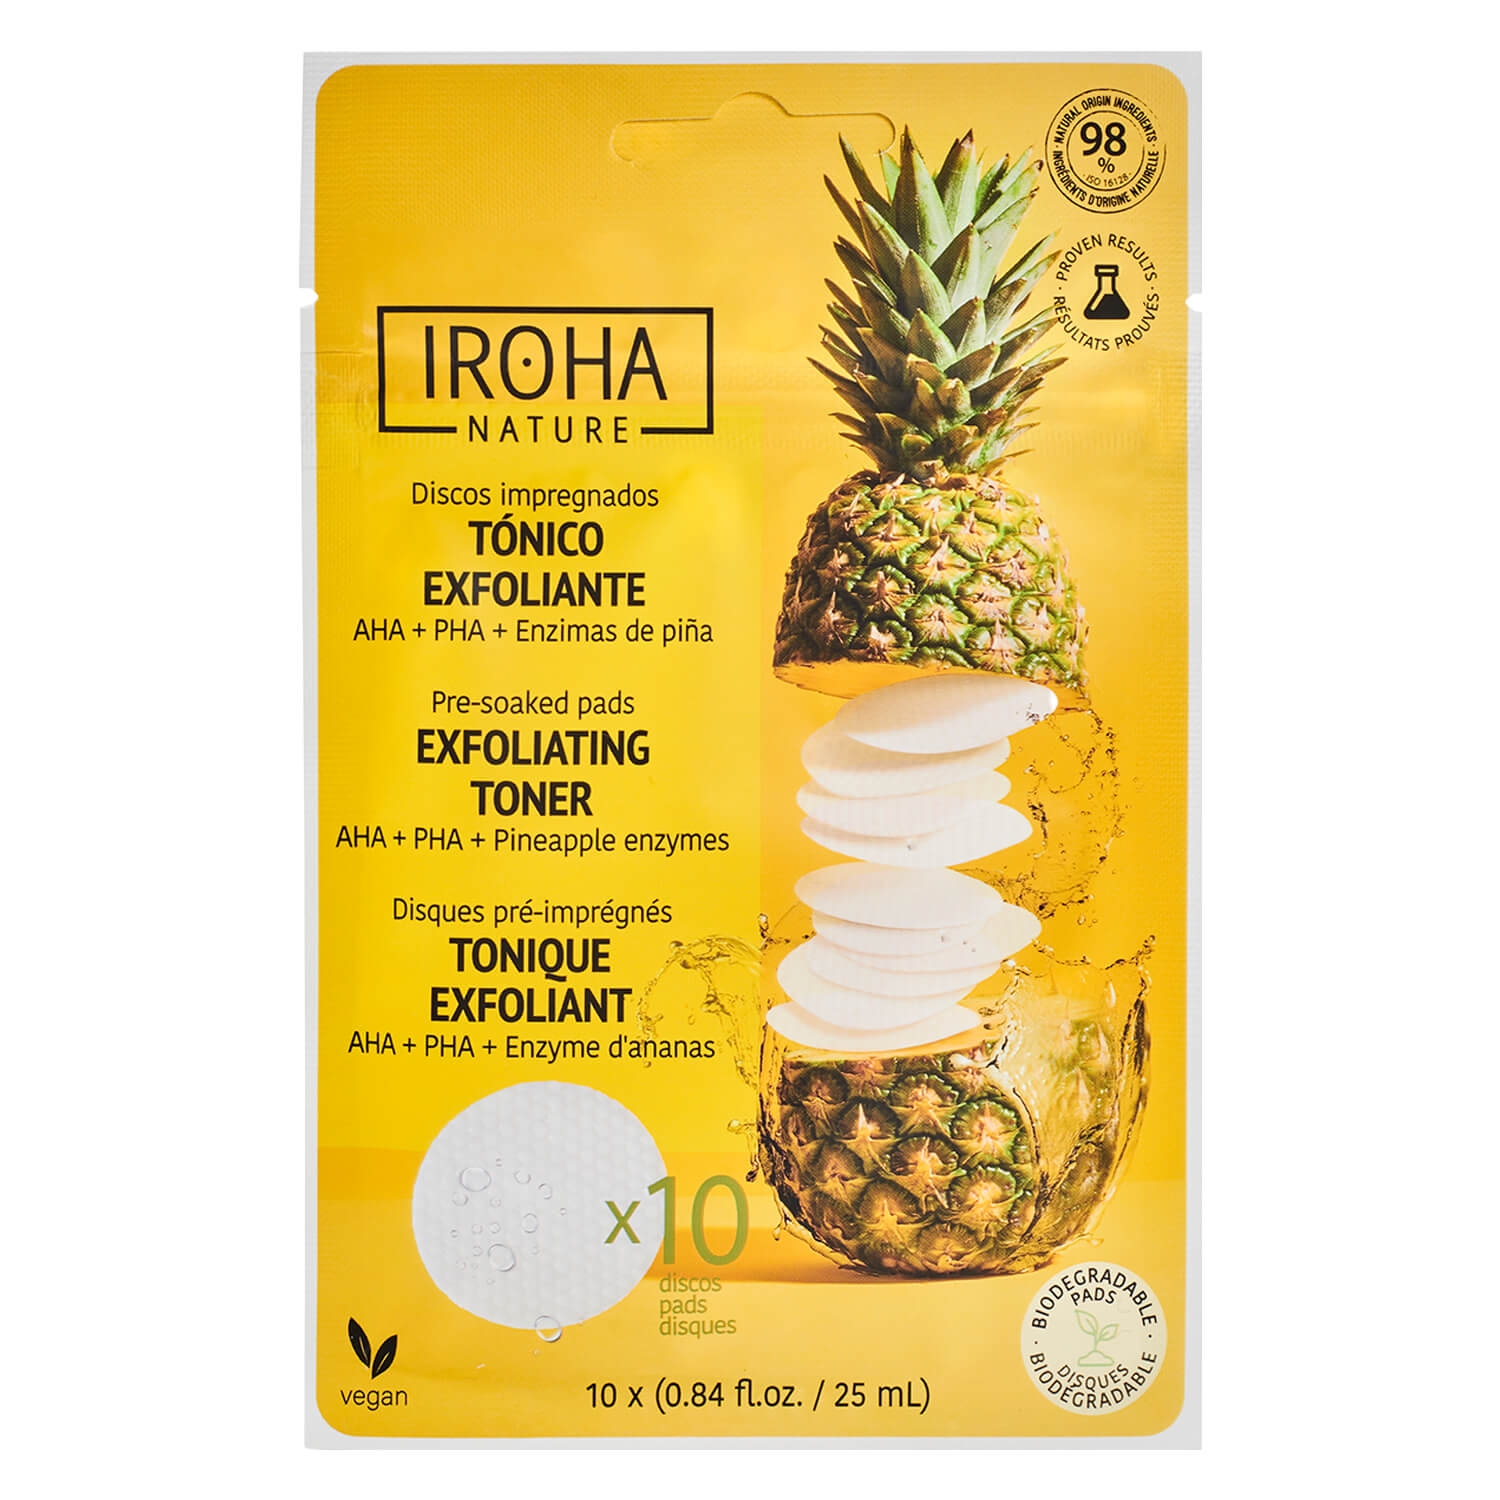 Produktbild von Iroha Nature - Exfoliating Toner Pads